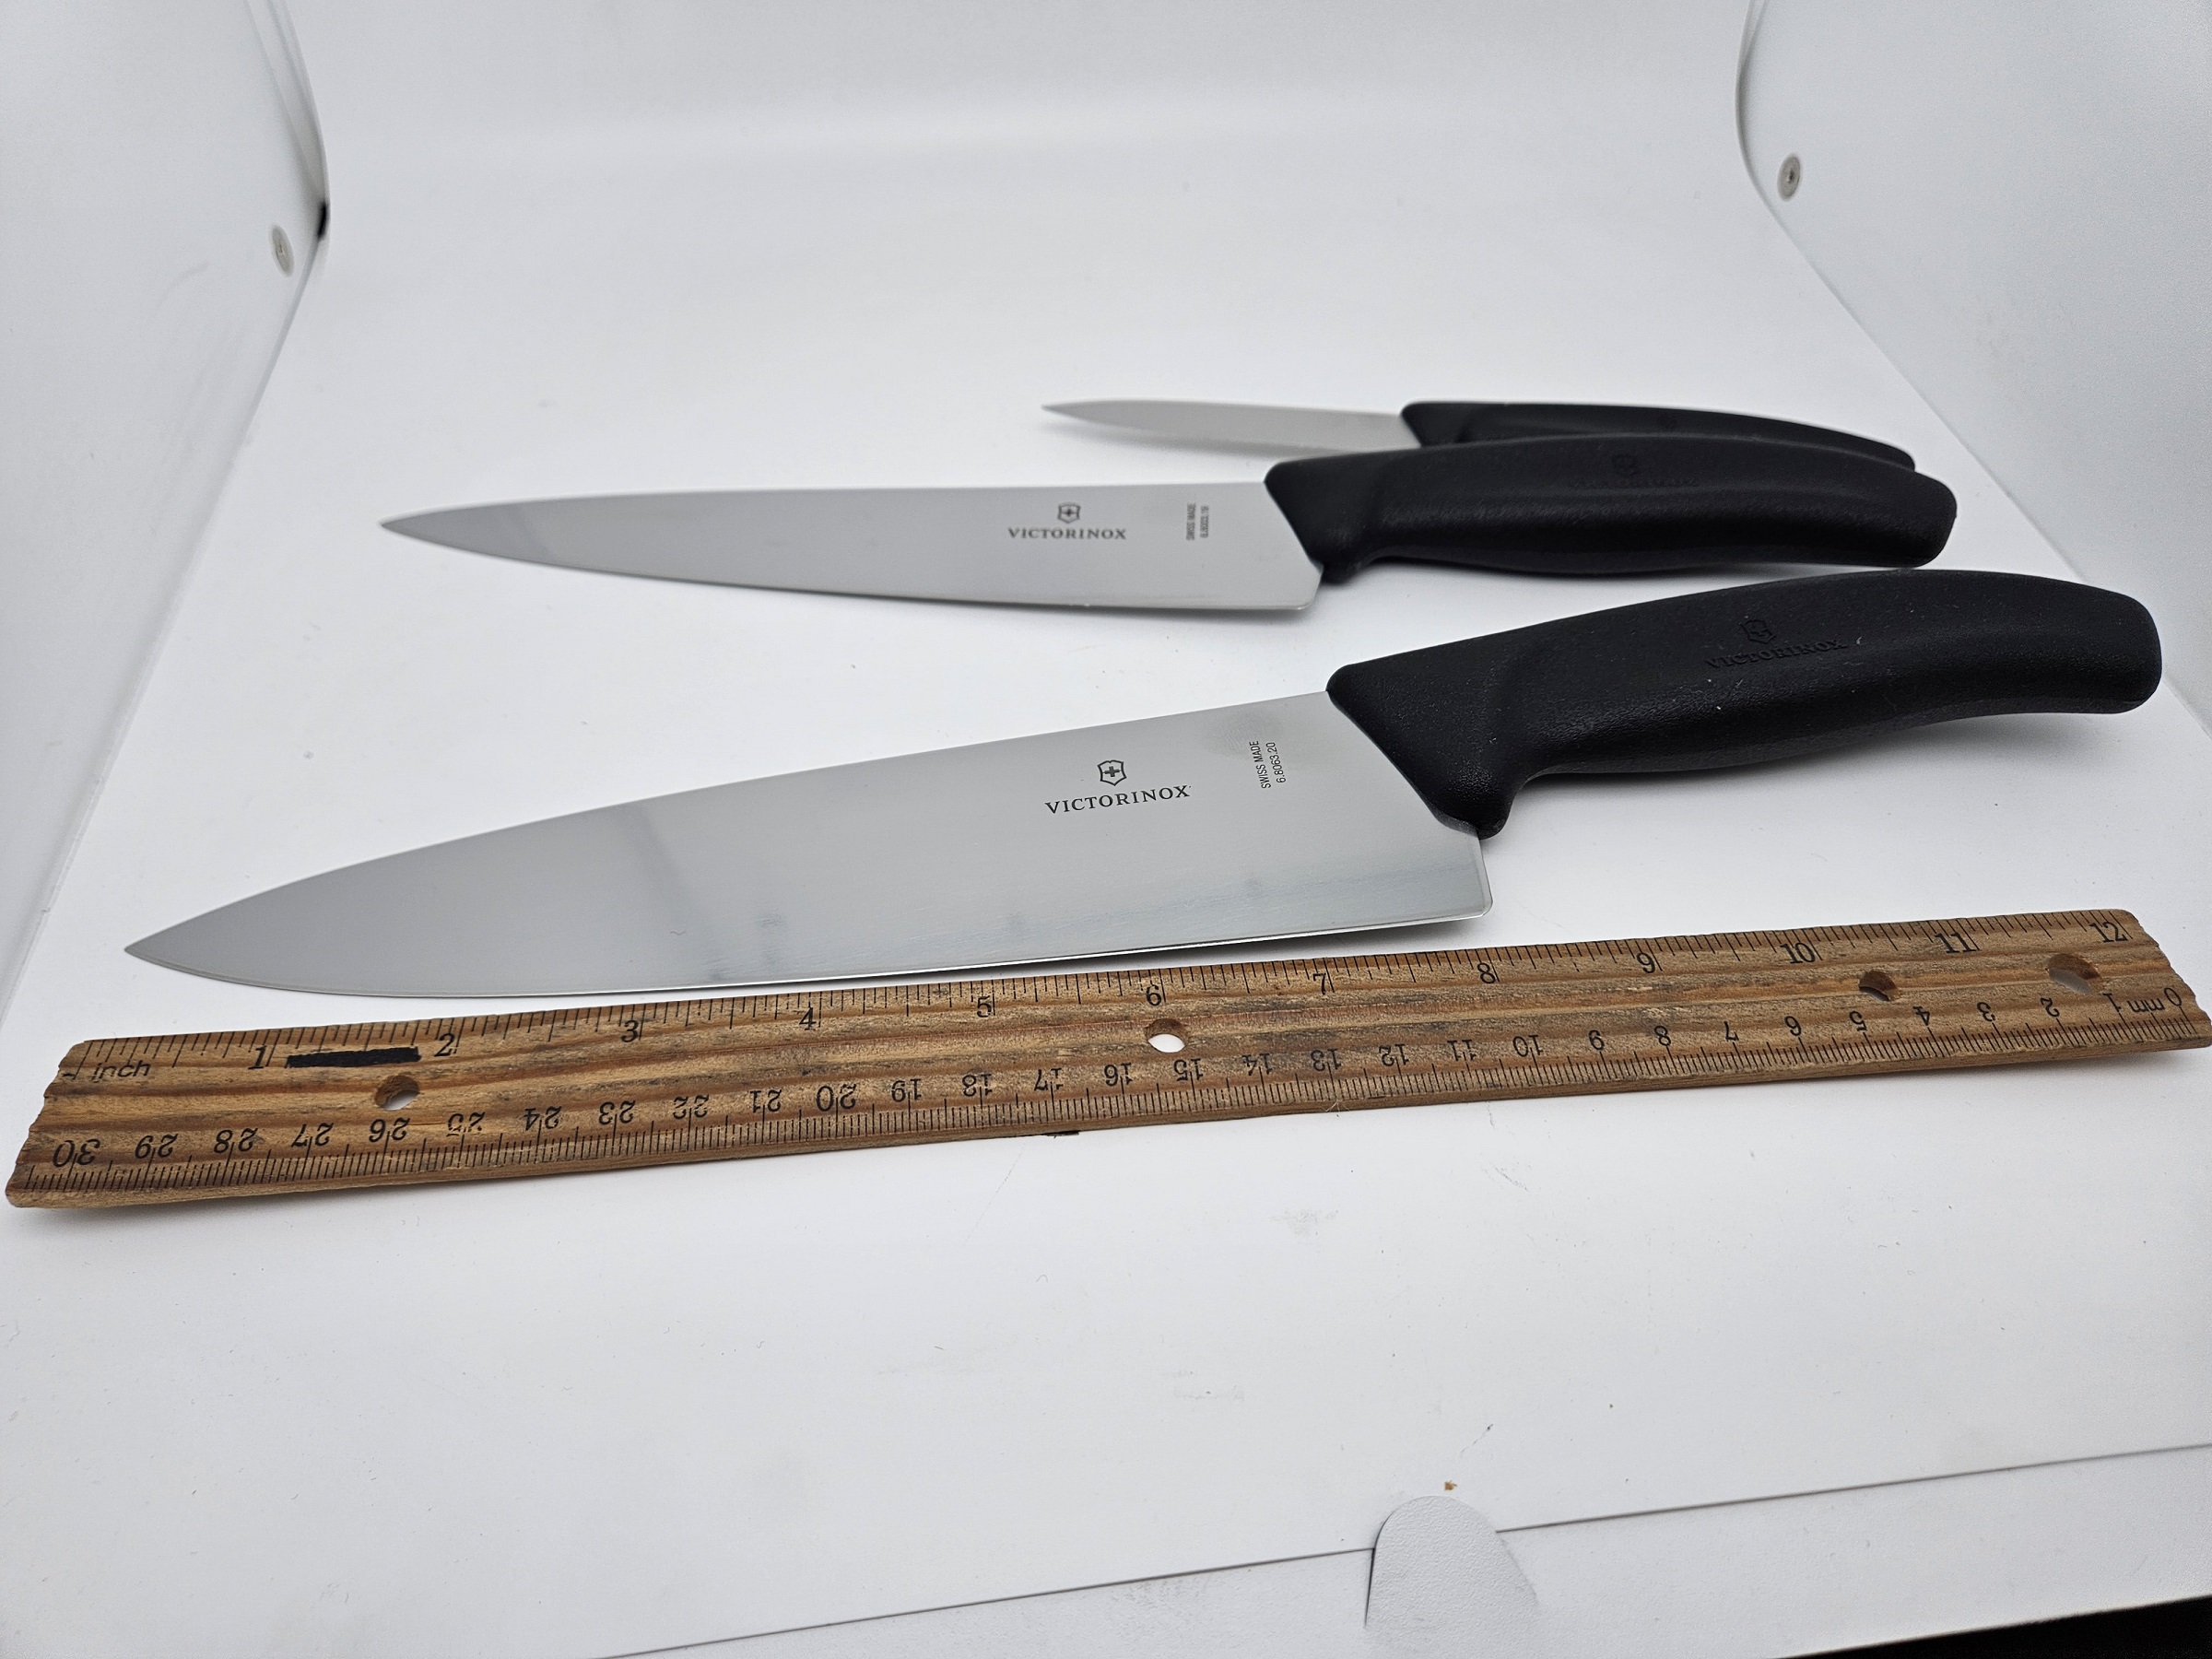 Victorinox Swiss Classic Knife Set, 18 Piece - Kitchen Knives